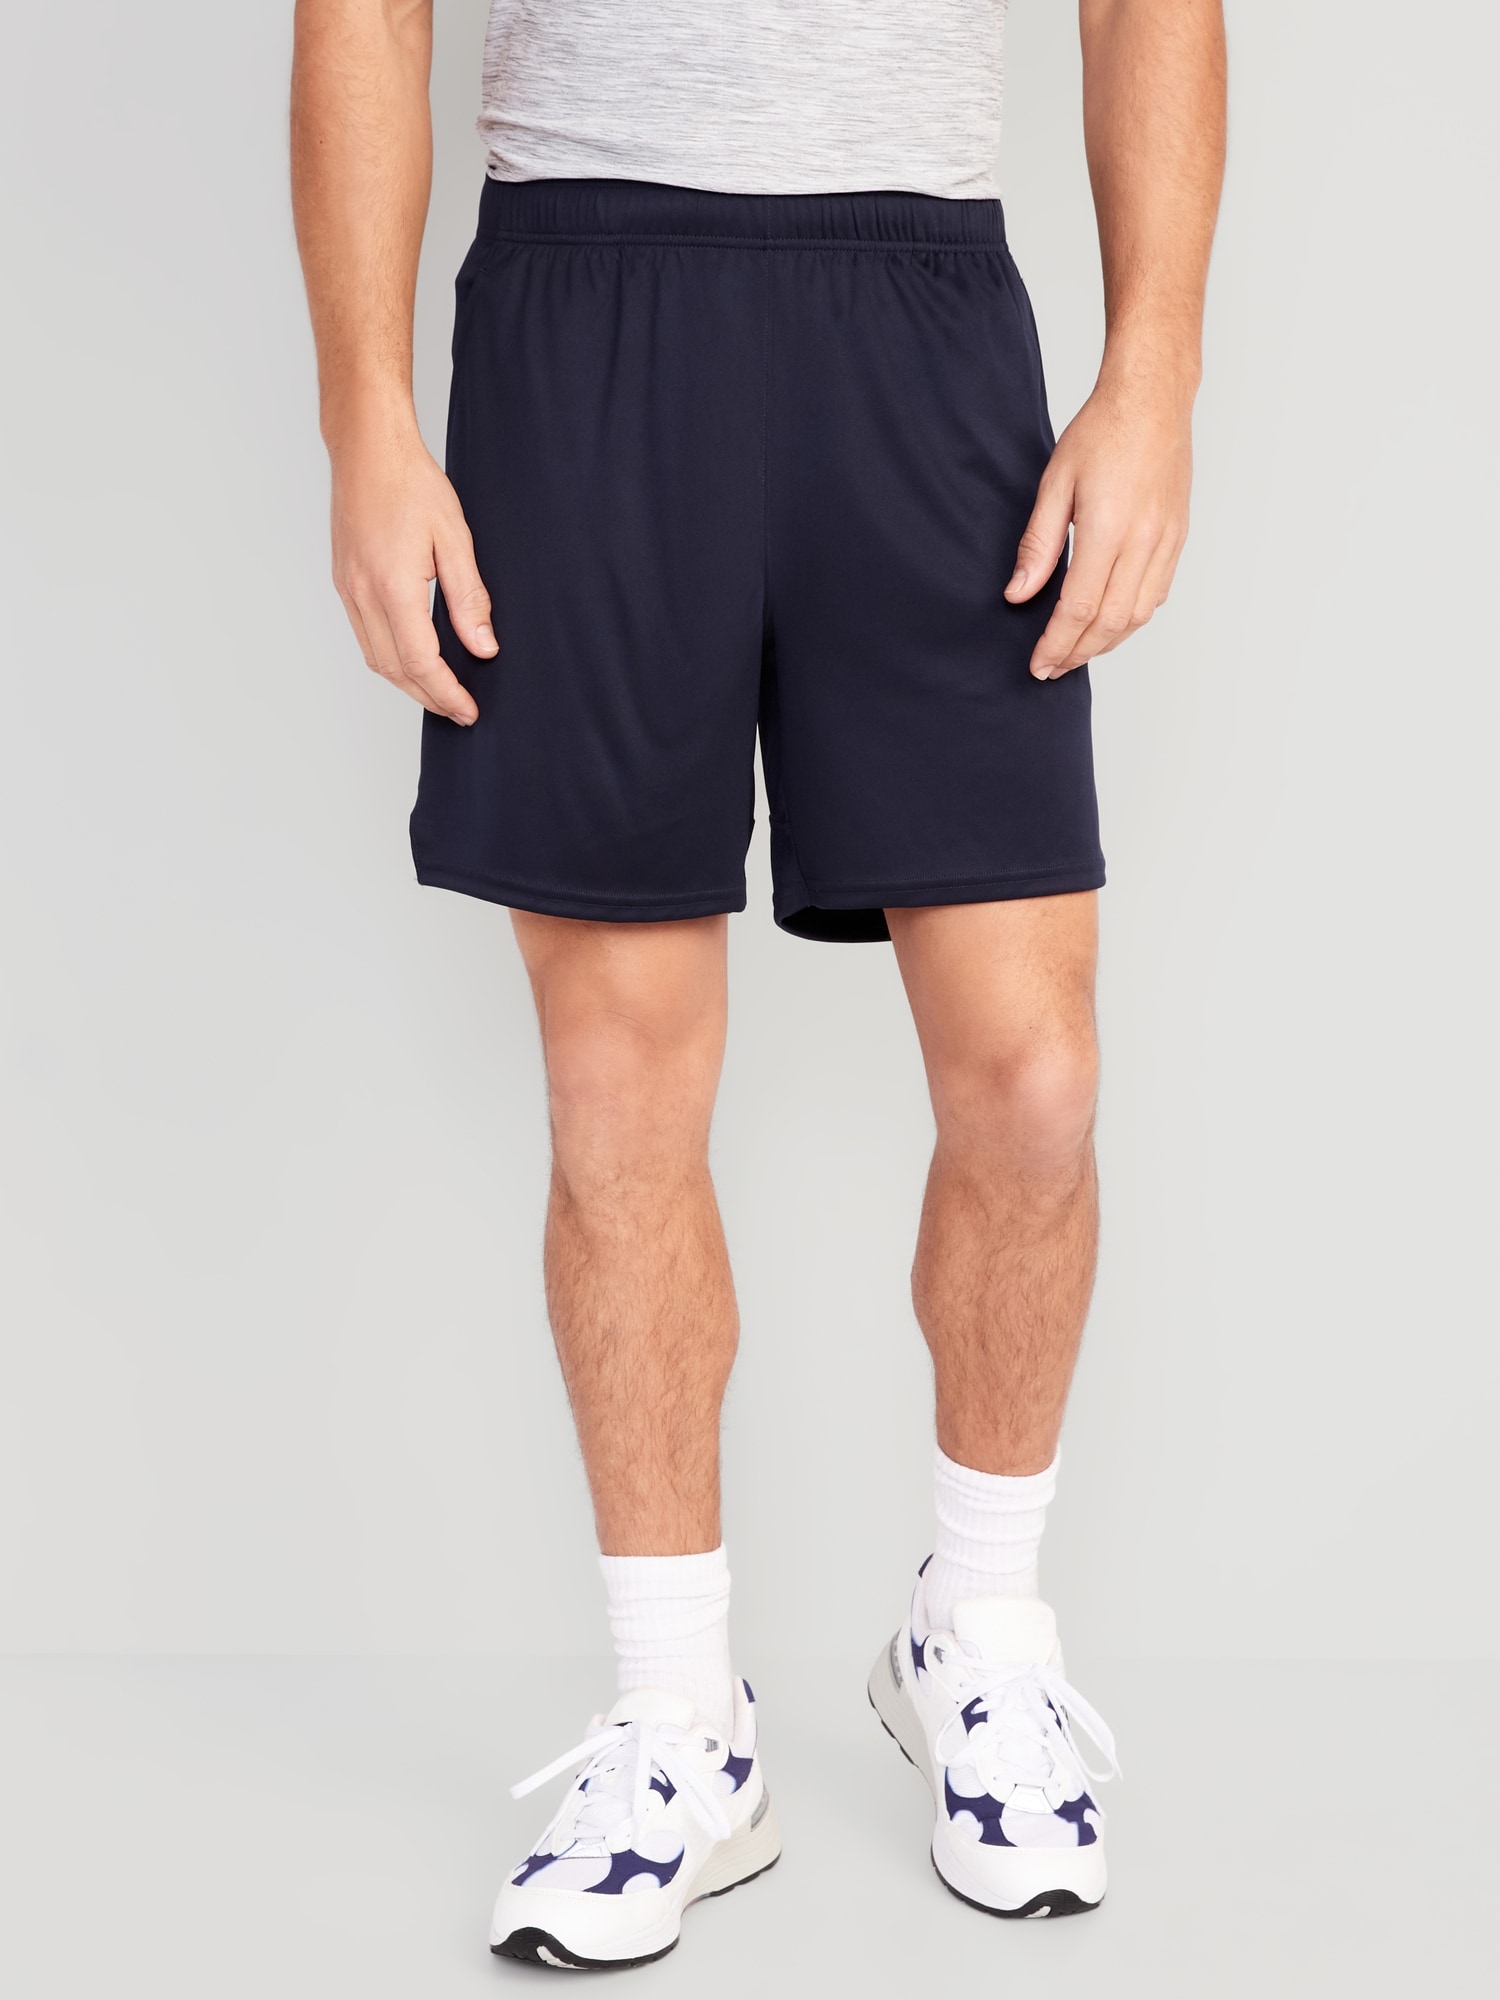 Go-Dry Mesh Basketball Shorts -- 7-inch inseam | Old Navy